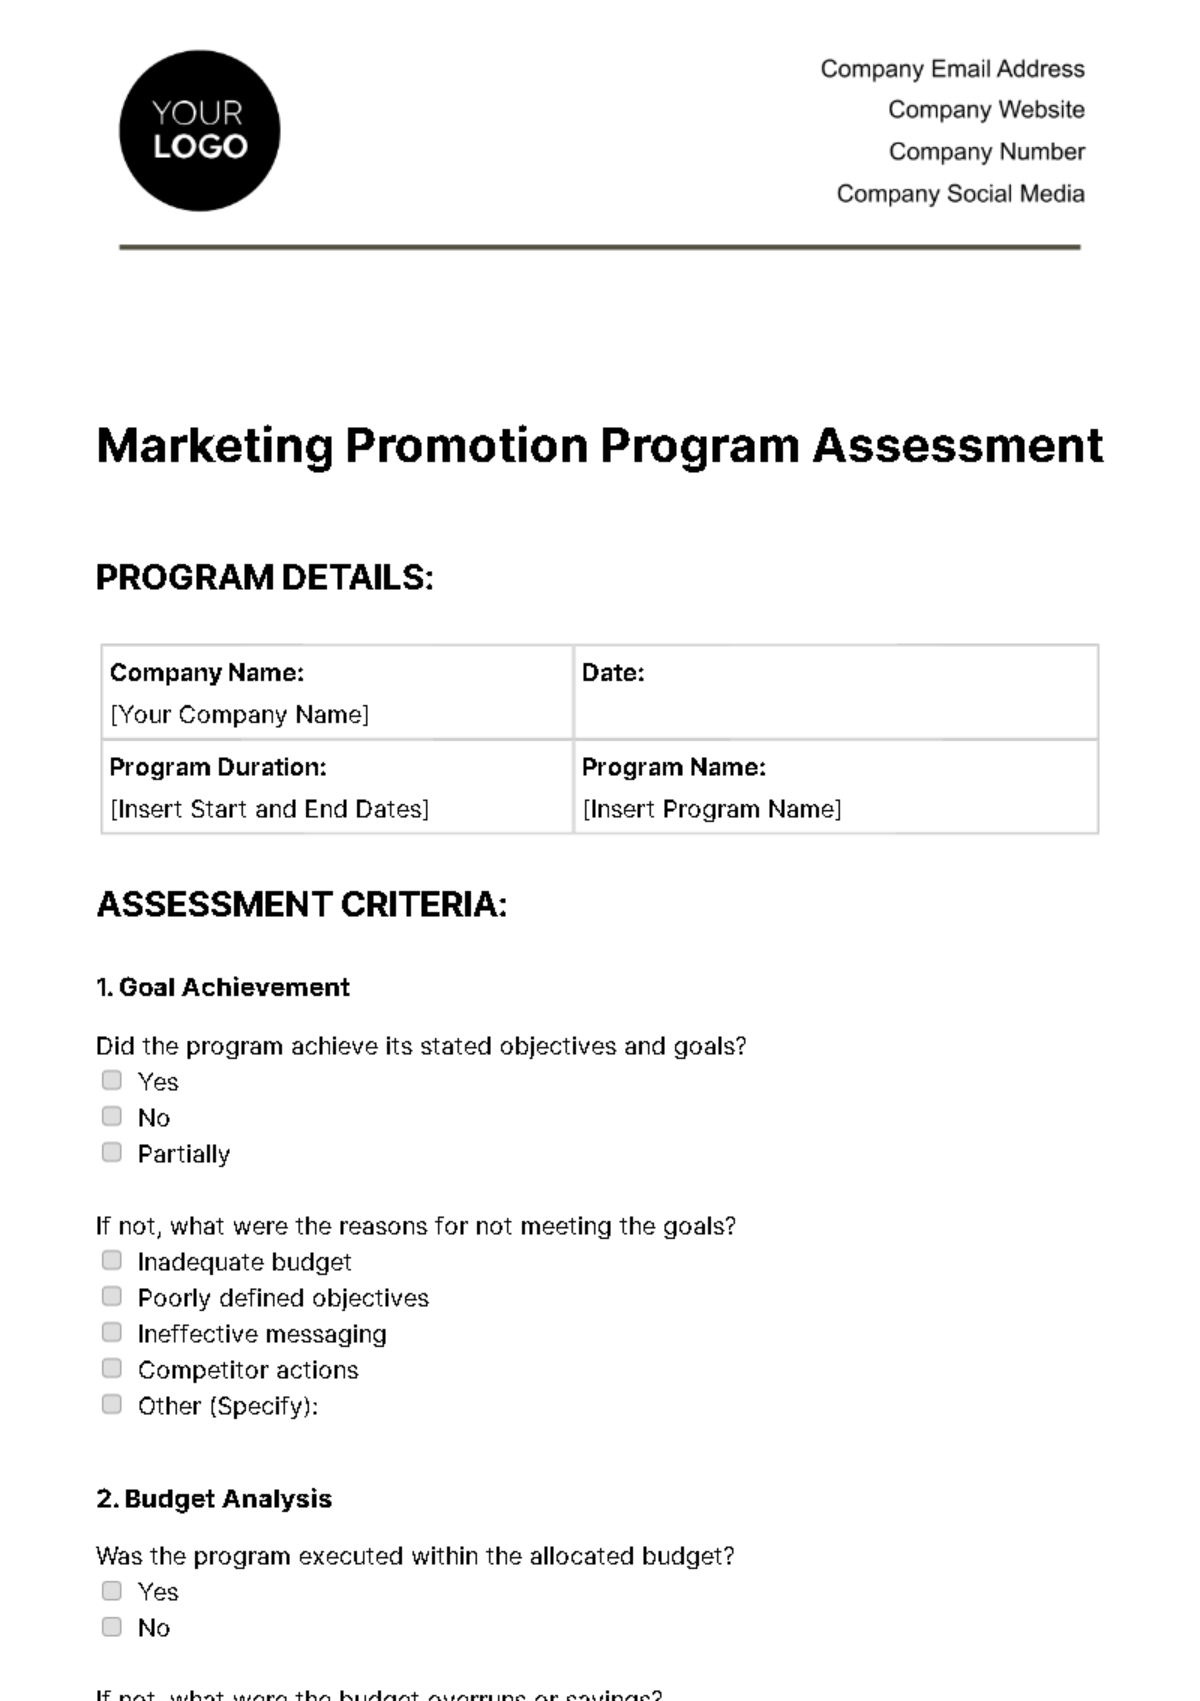 Free Marketing Promotion Program Assessment Template